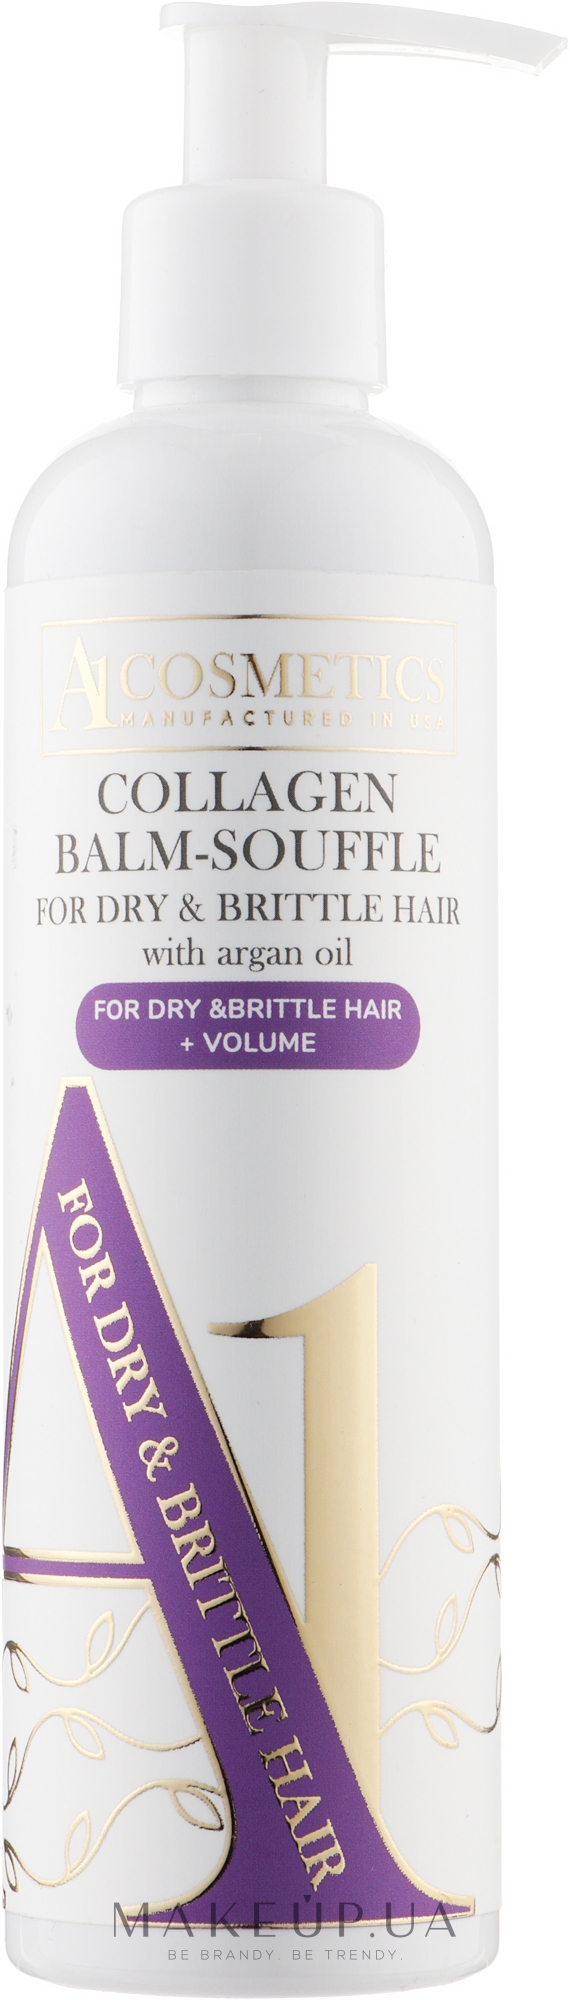 Коллагеновый бальзам-суфле для сухих и ломких волос - A1 Cosmetics For Dry & Brittle Hair Collagen Balm-Souffle With Argan Oil + Volume — фото 250ml